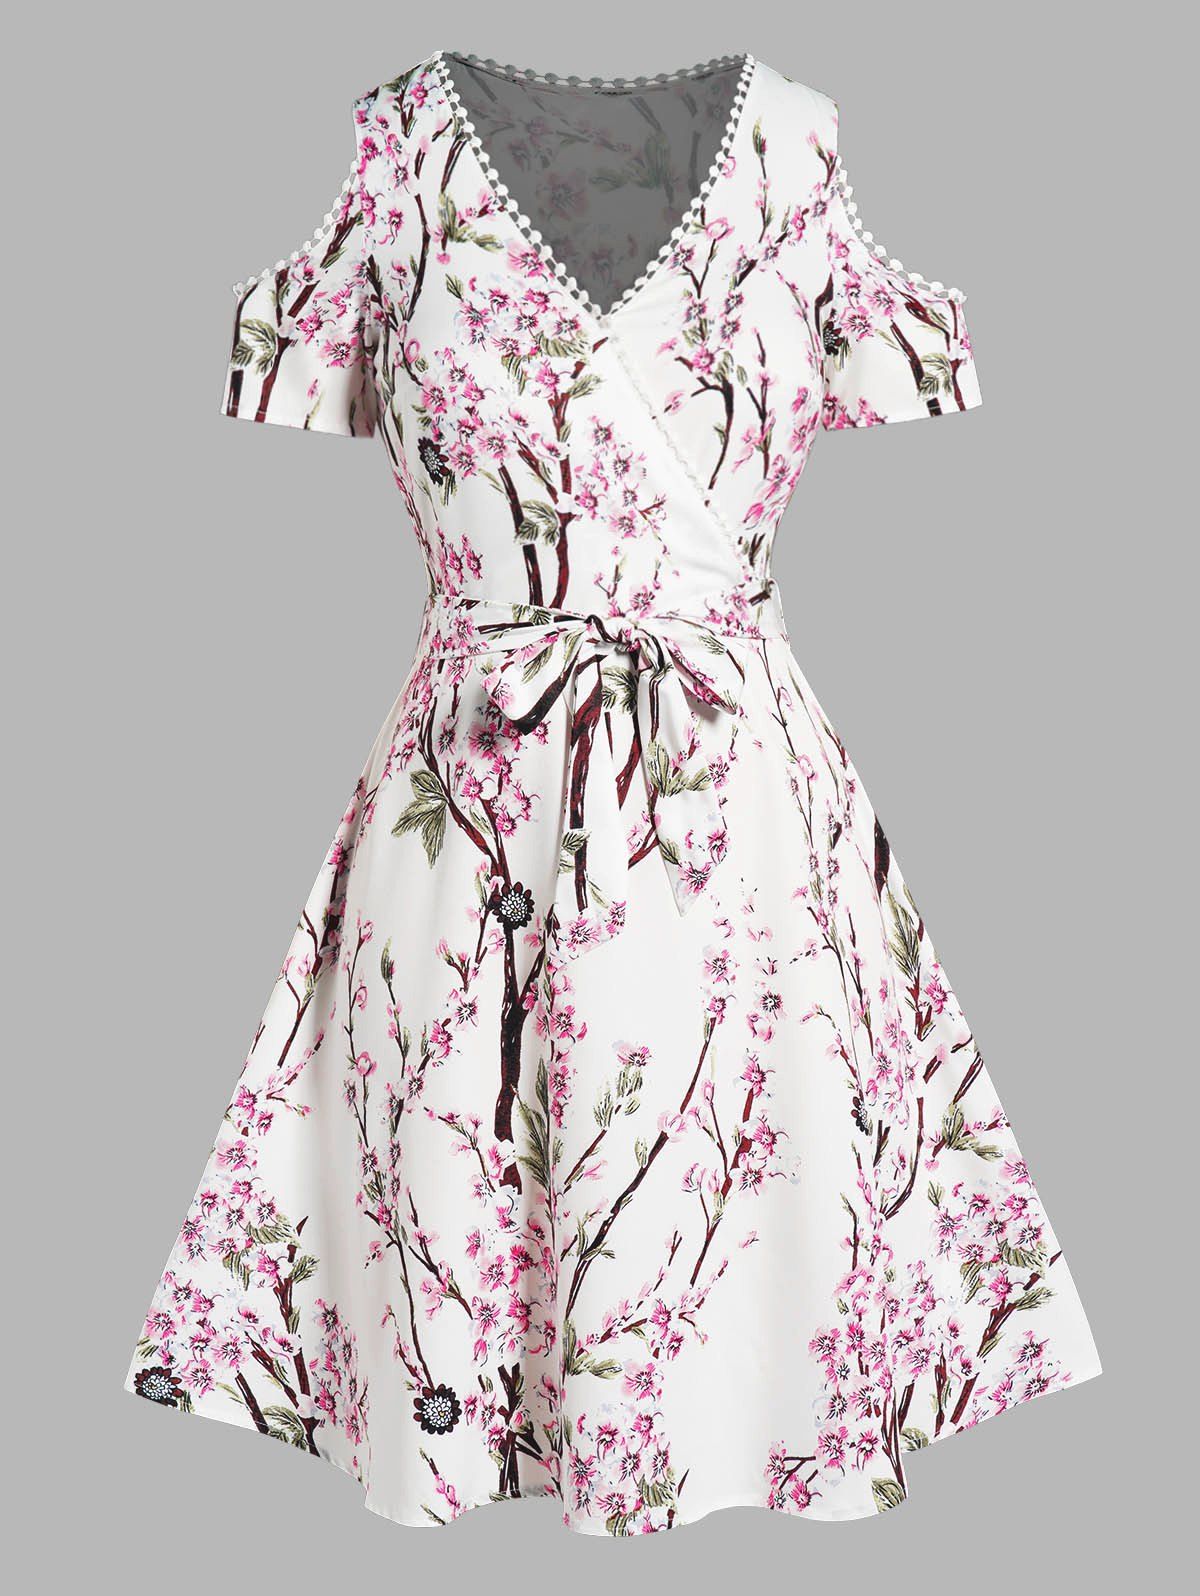 Plus Size Dress Flower Allover Print A Line Dress Cold Shoulder Lace Trim Belted Surplice Dress - WHITE 5X